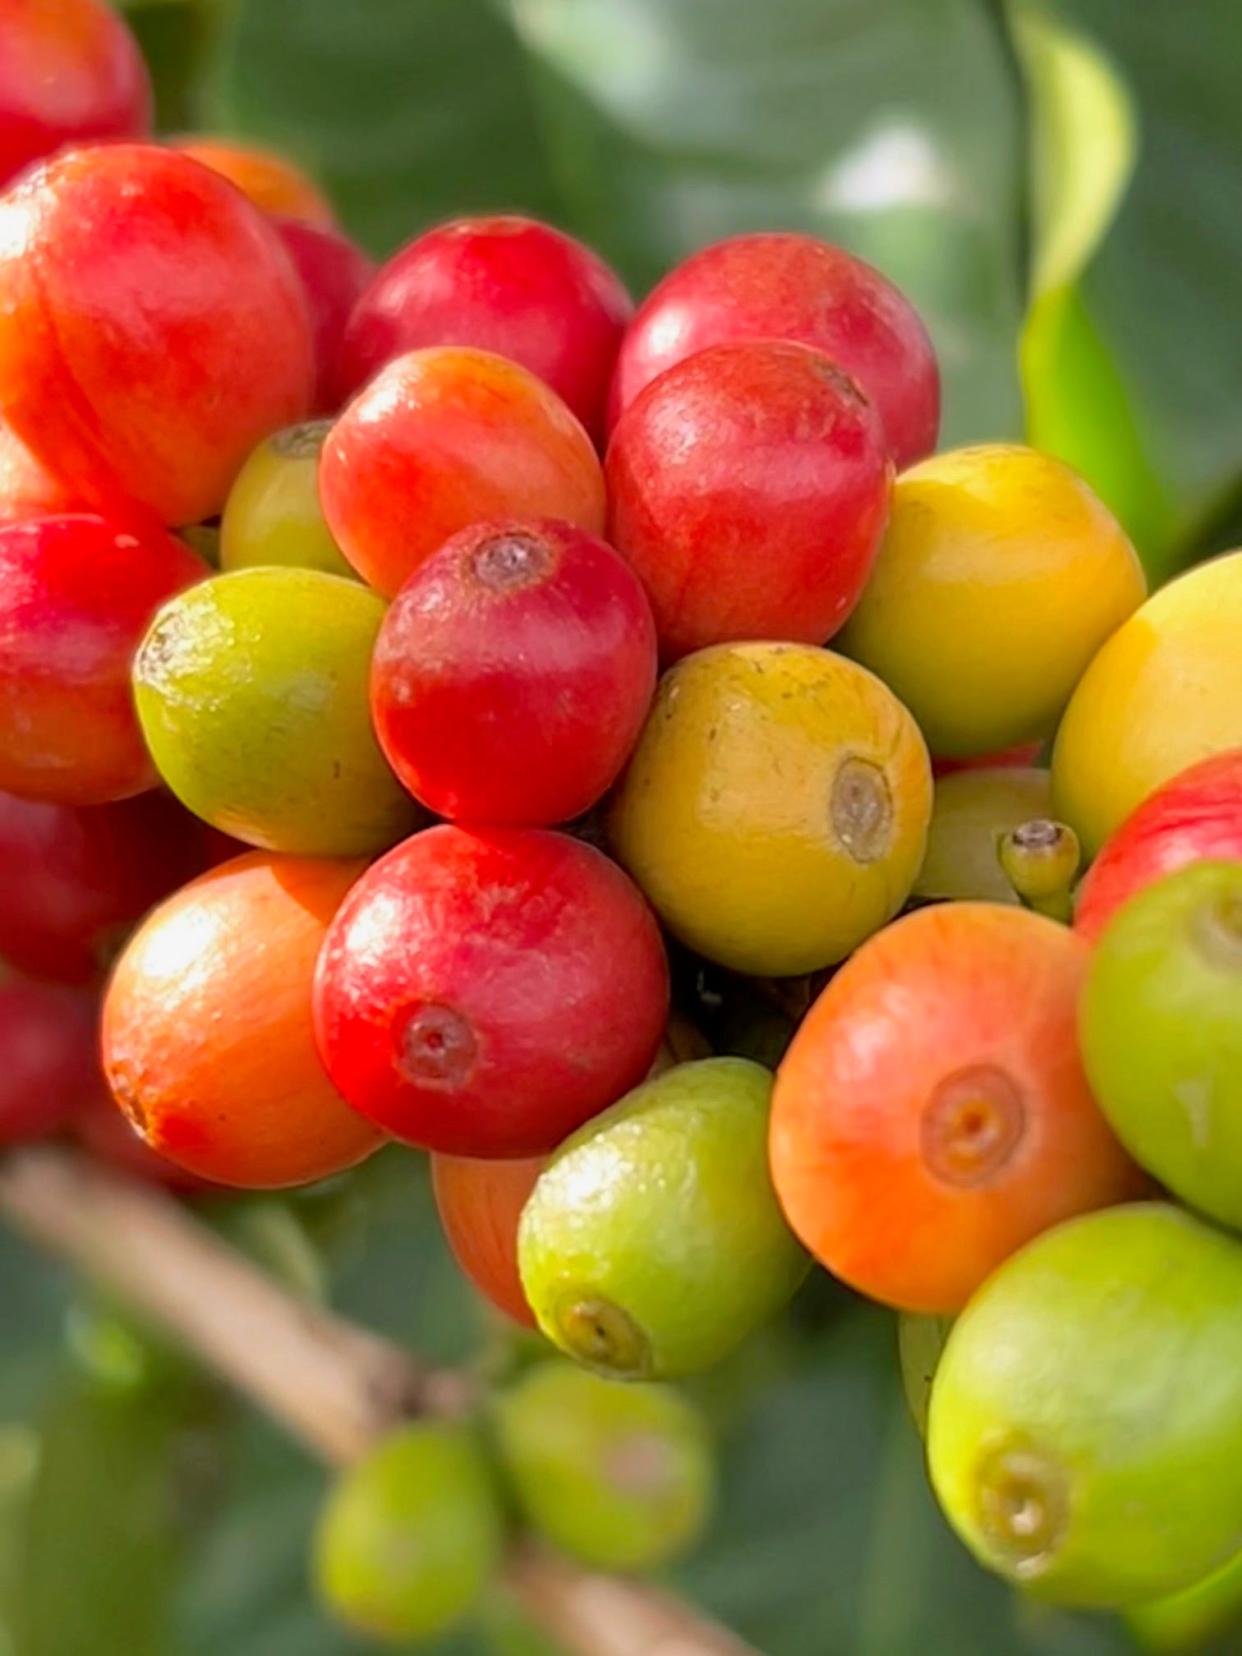 Coffee cherries are seen along the free self-guided tour at Kauai Coffee.